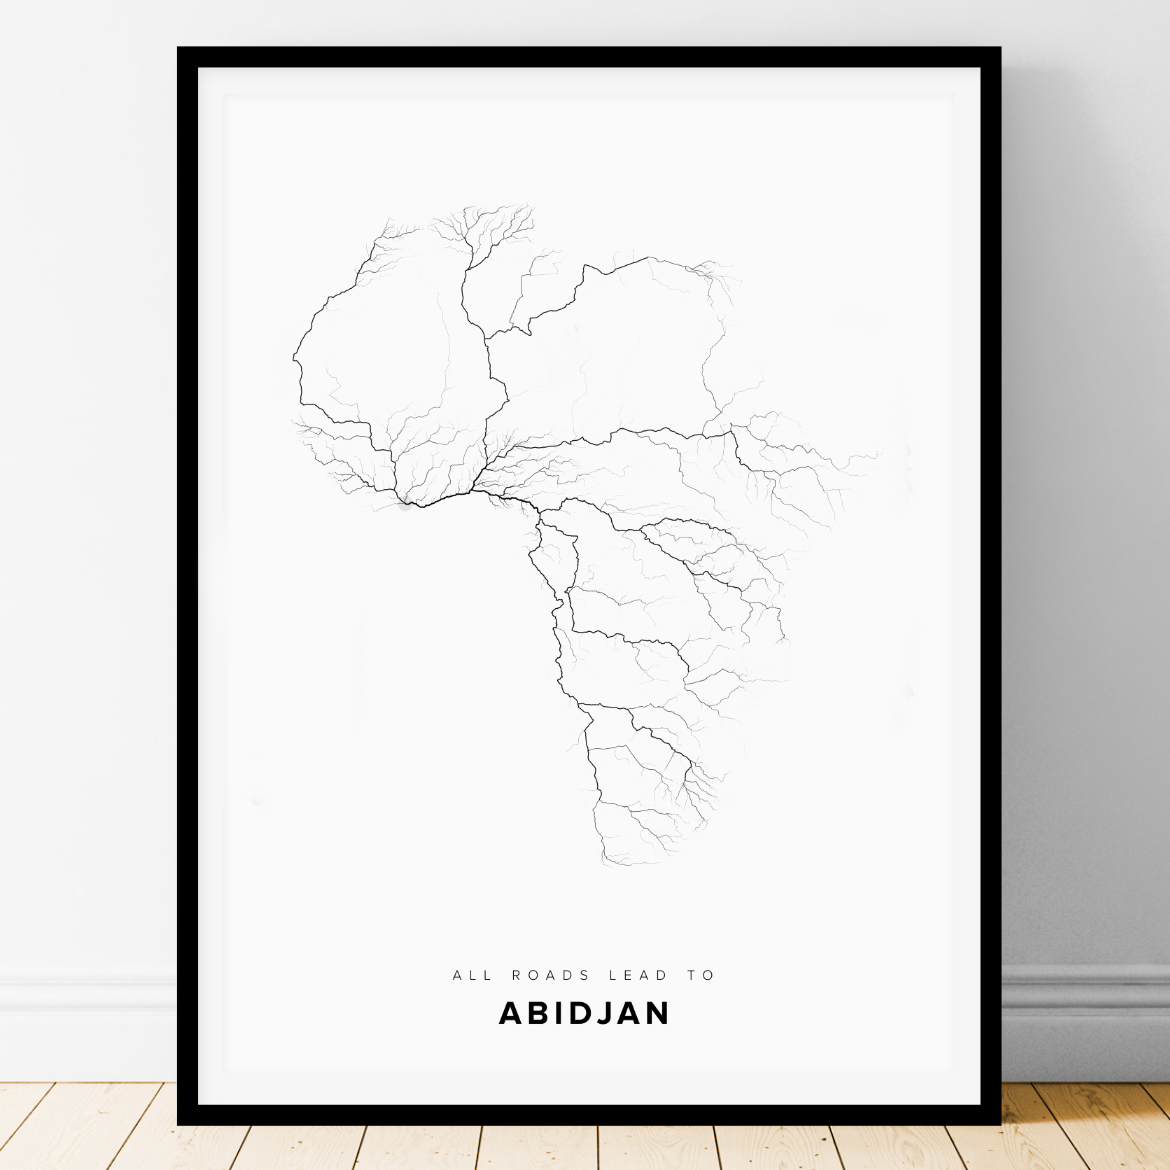 All roads lead to Abidjan (Côte d'Ivoire) Fine Art Map Print